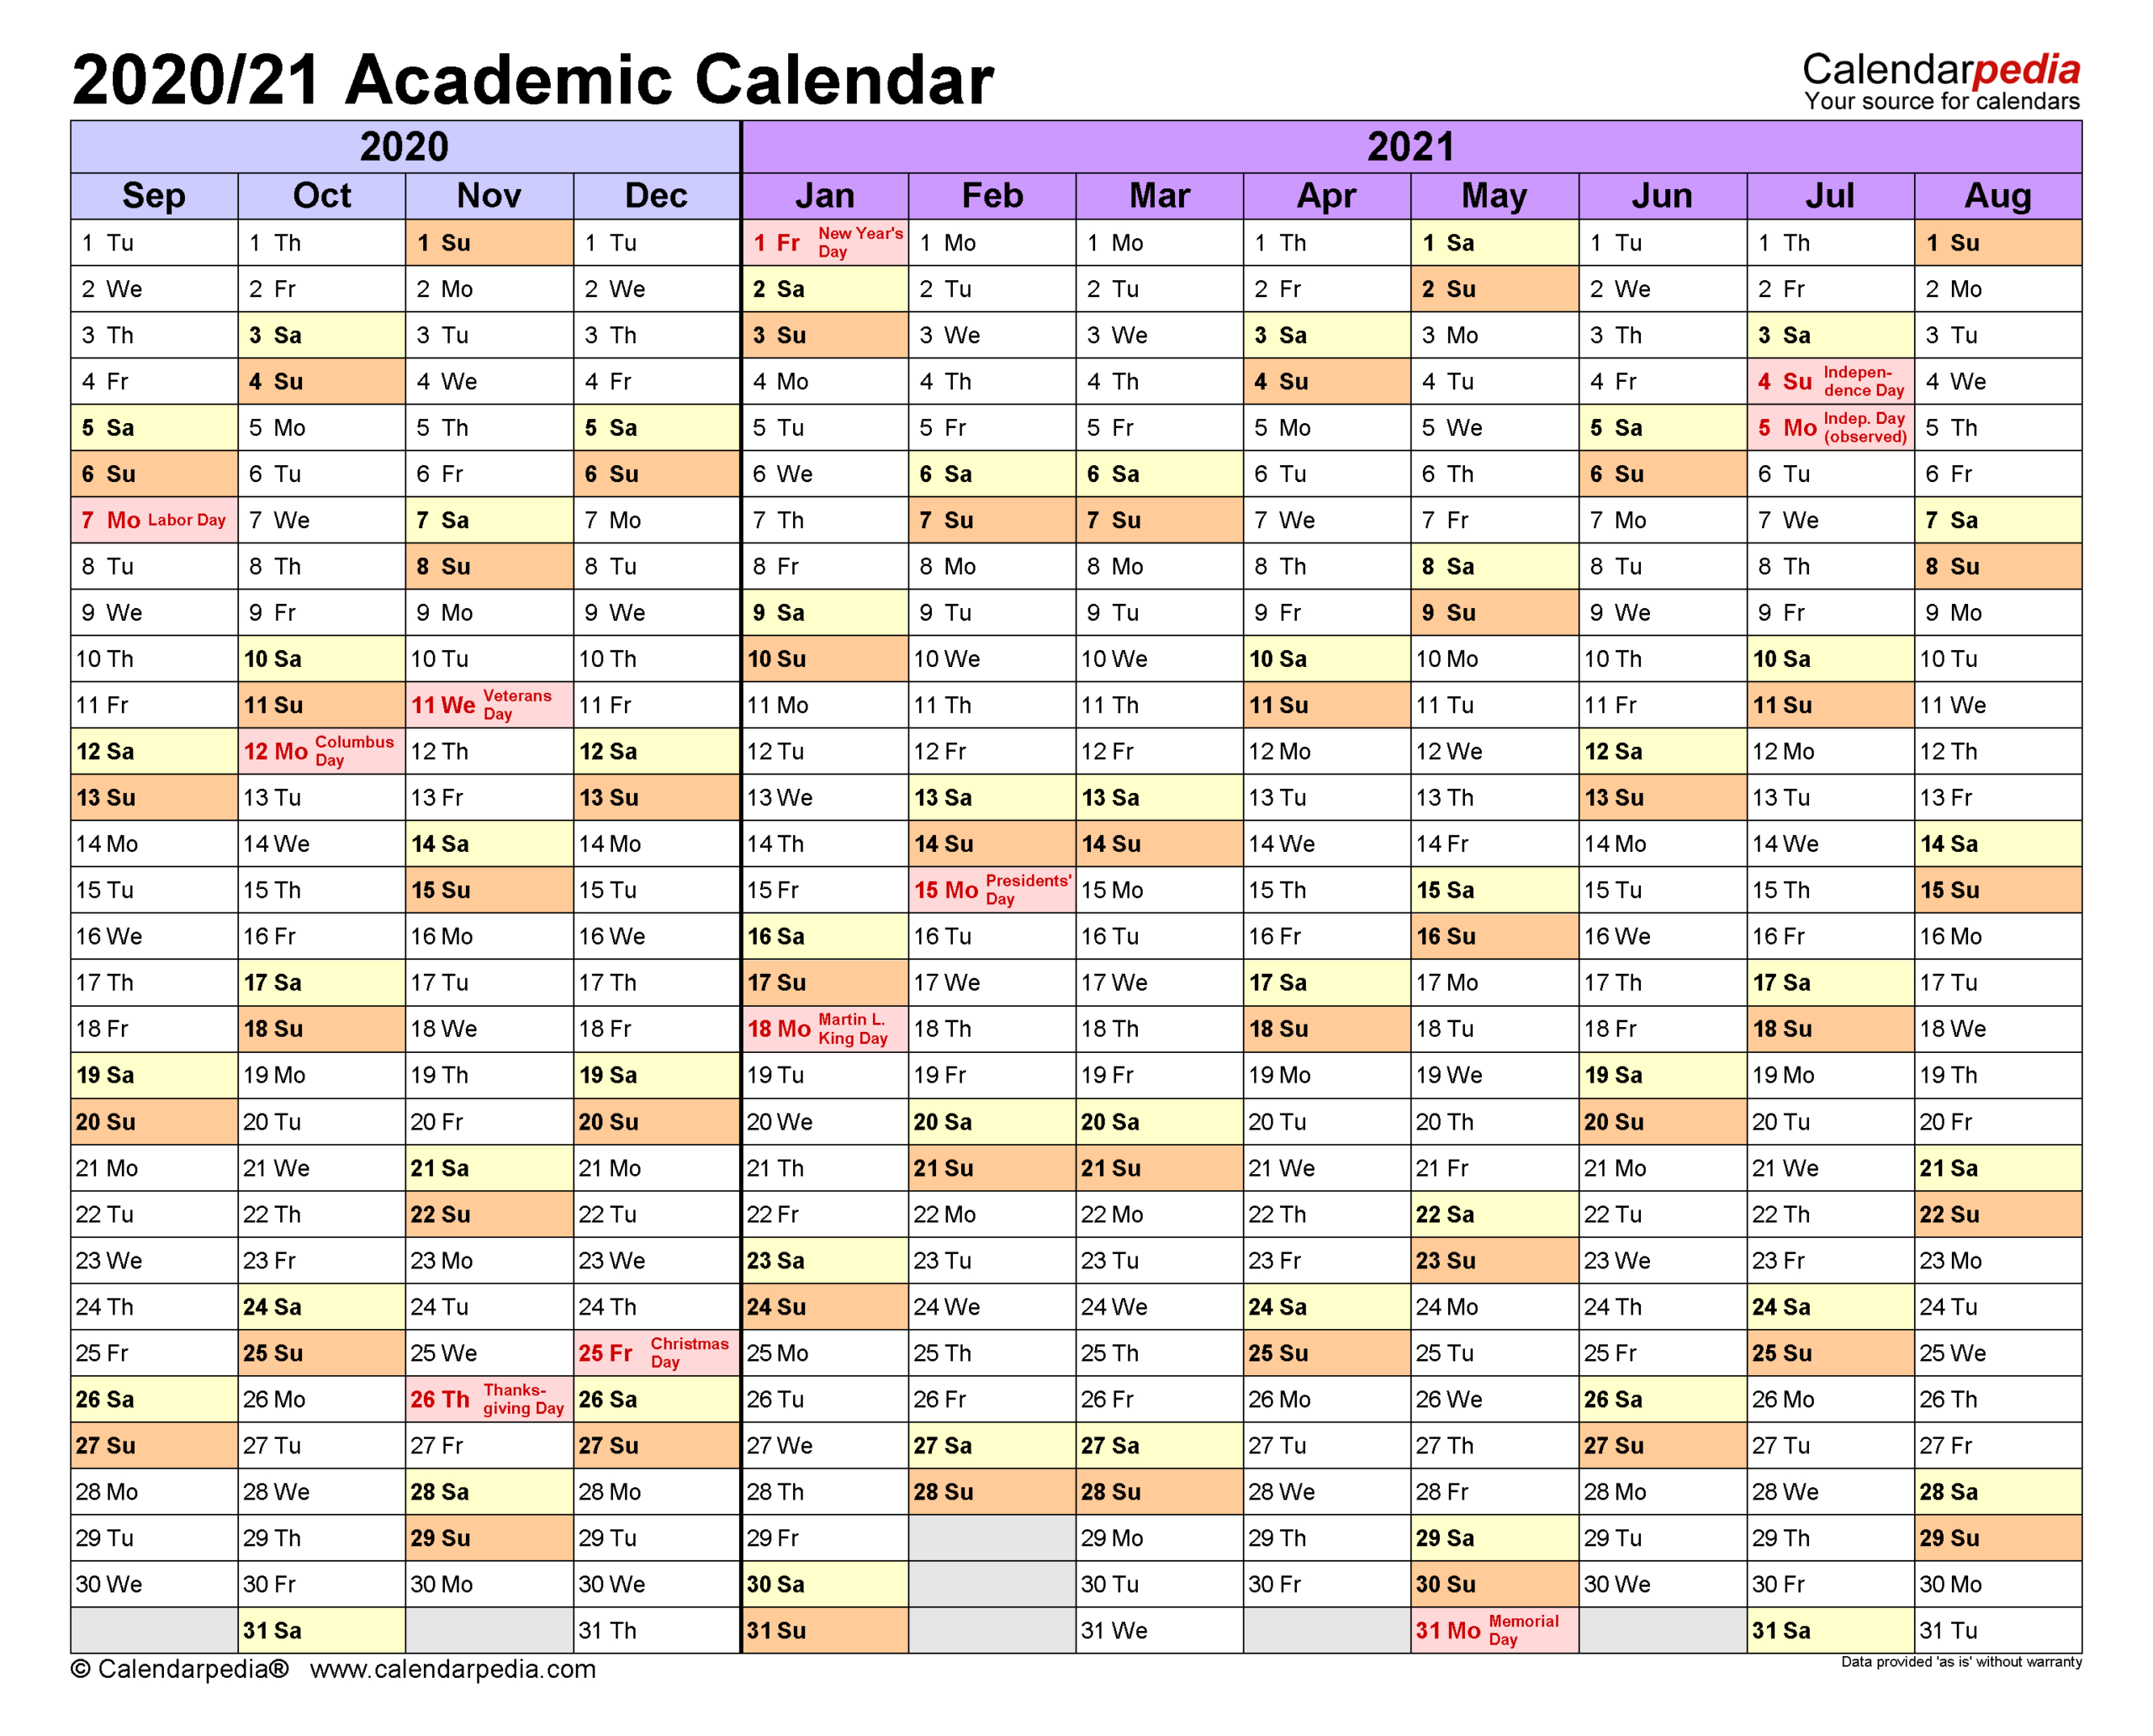 Academic Calendars 2020/2021 - Free Printable Word Templates